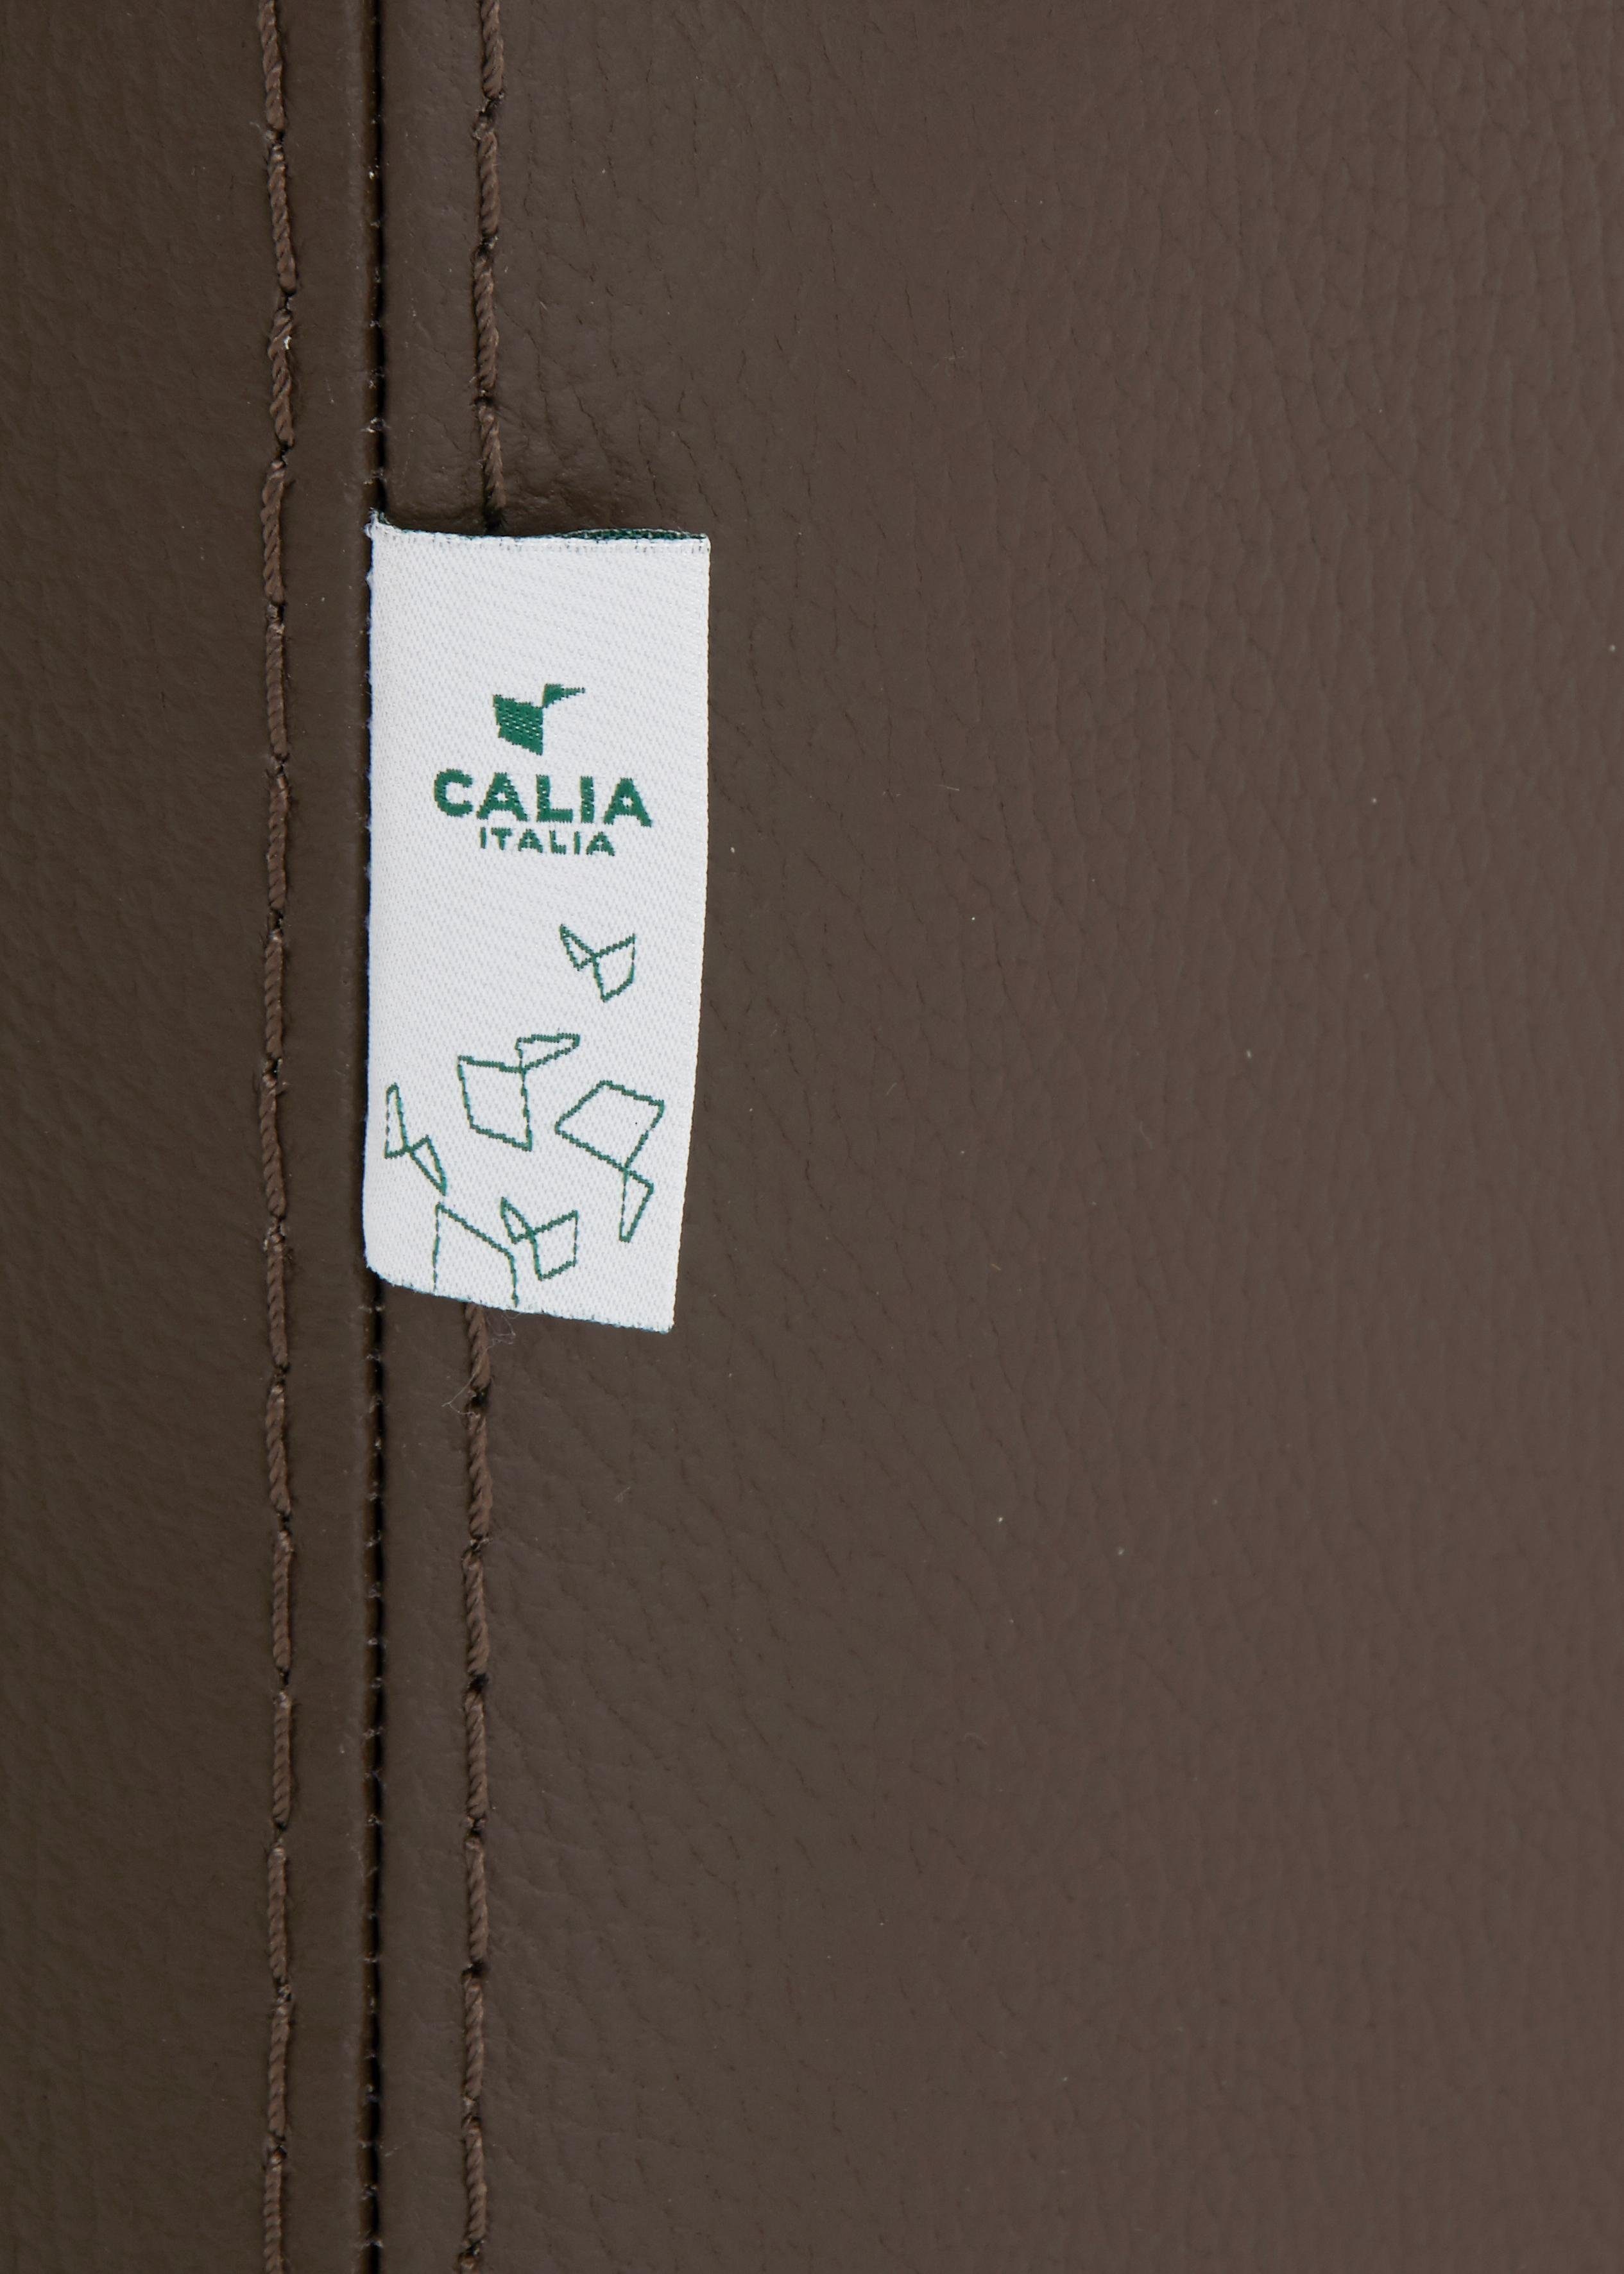 Sessel zwei Gaia, ITALIA CALIA in Lederqualitäten